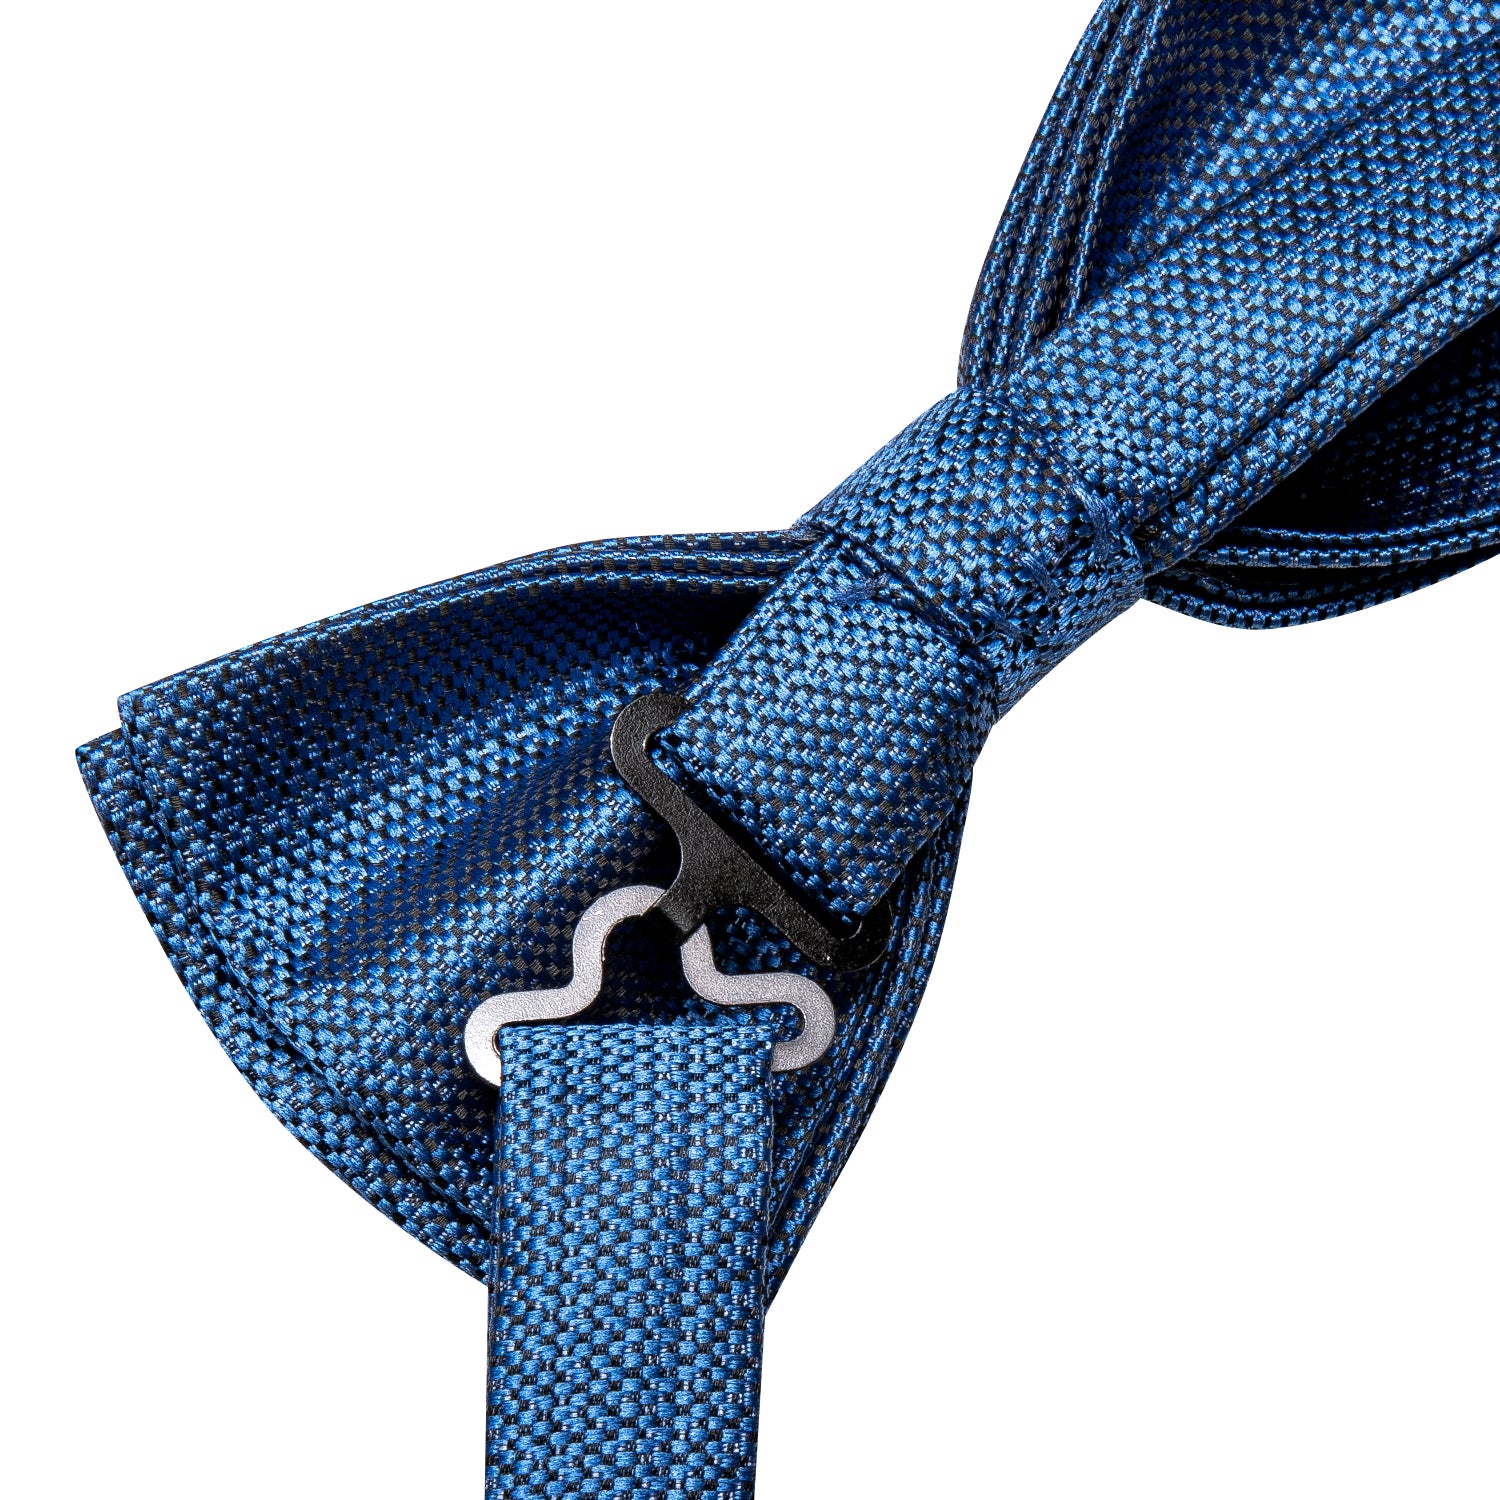 Hi-Tie Blue Weave Pre-tied Bow Tie Hanky Cufflinks Set